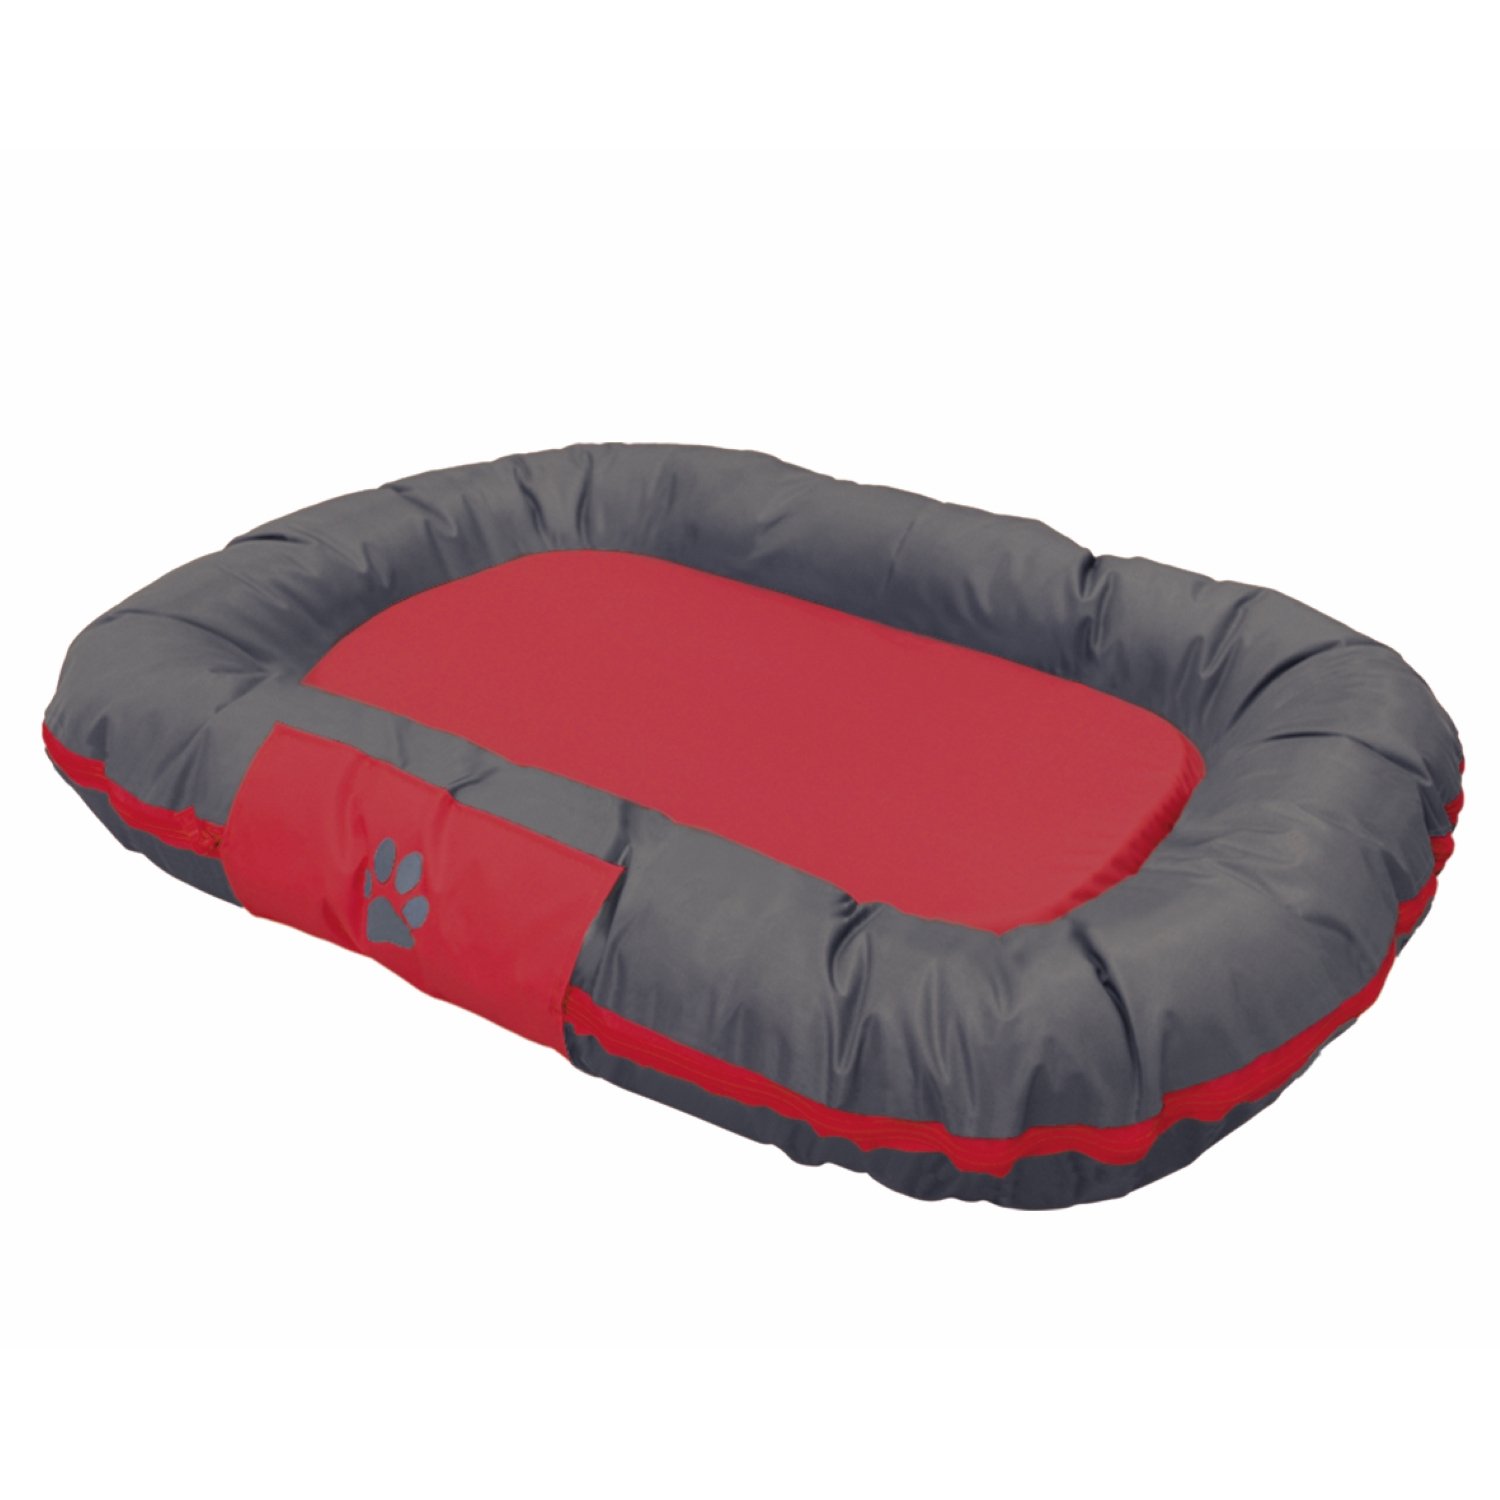 Лежак для животных Nobby Reno большой Серый-Красный 113х83х12 см - фото 1